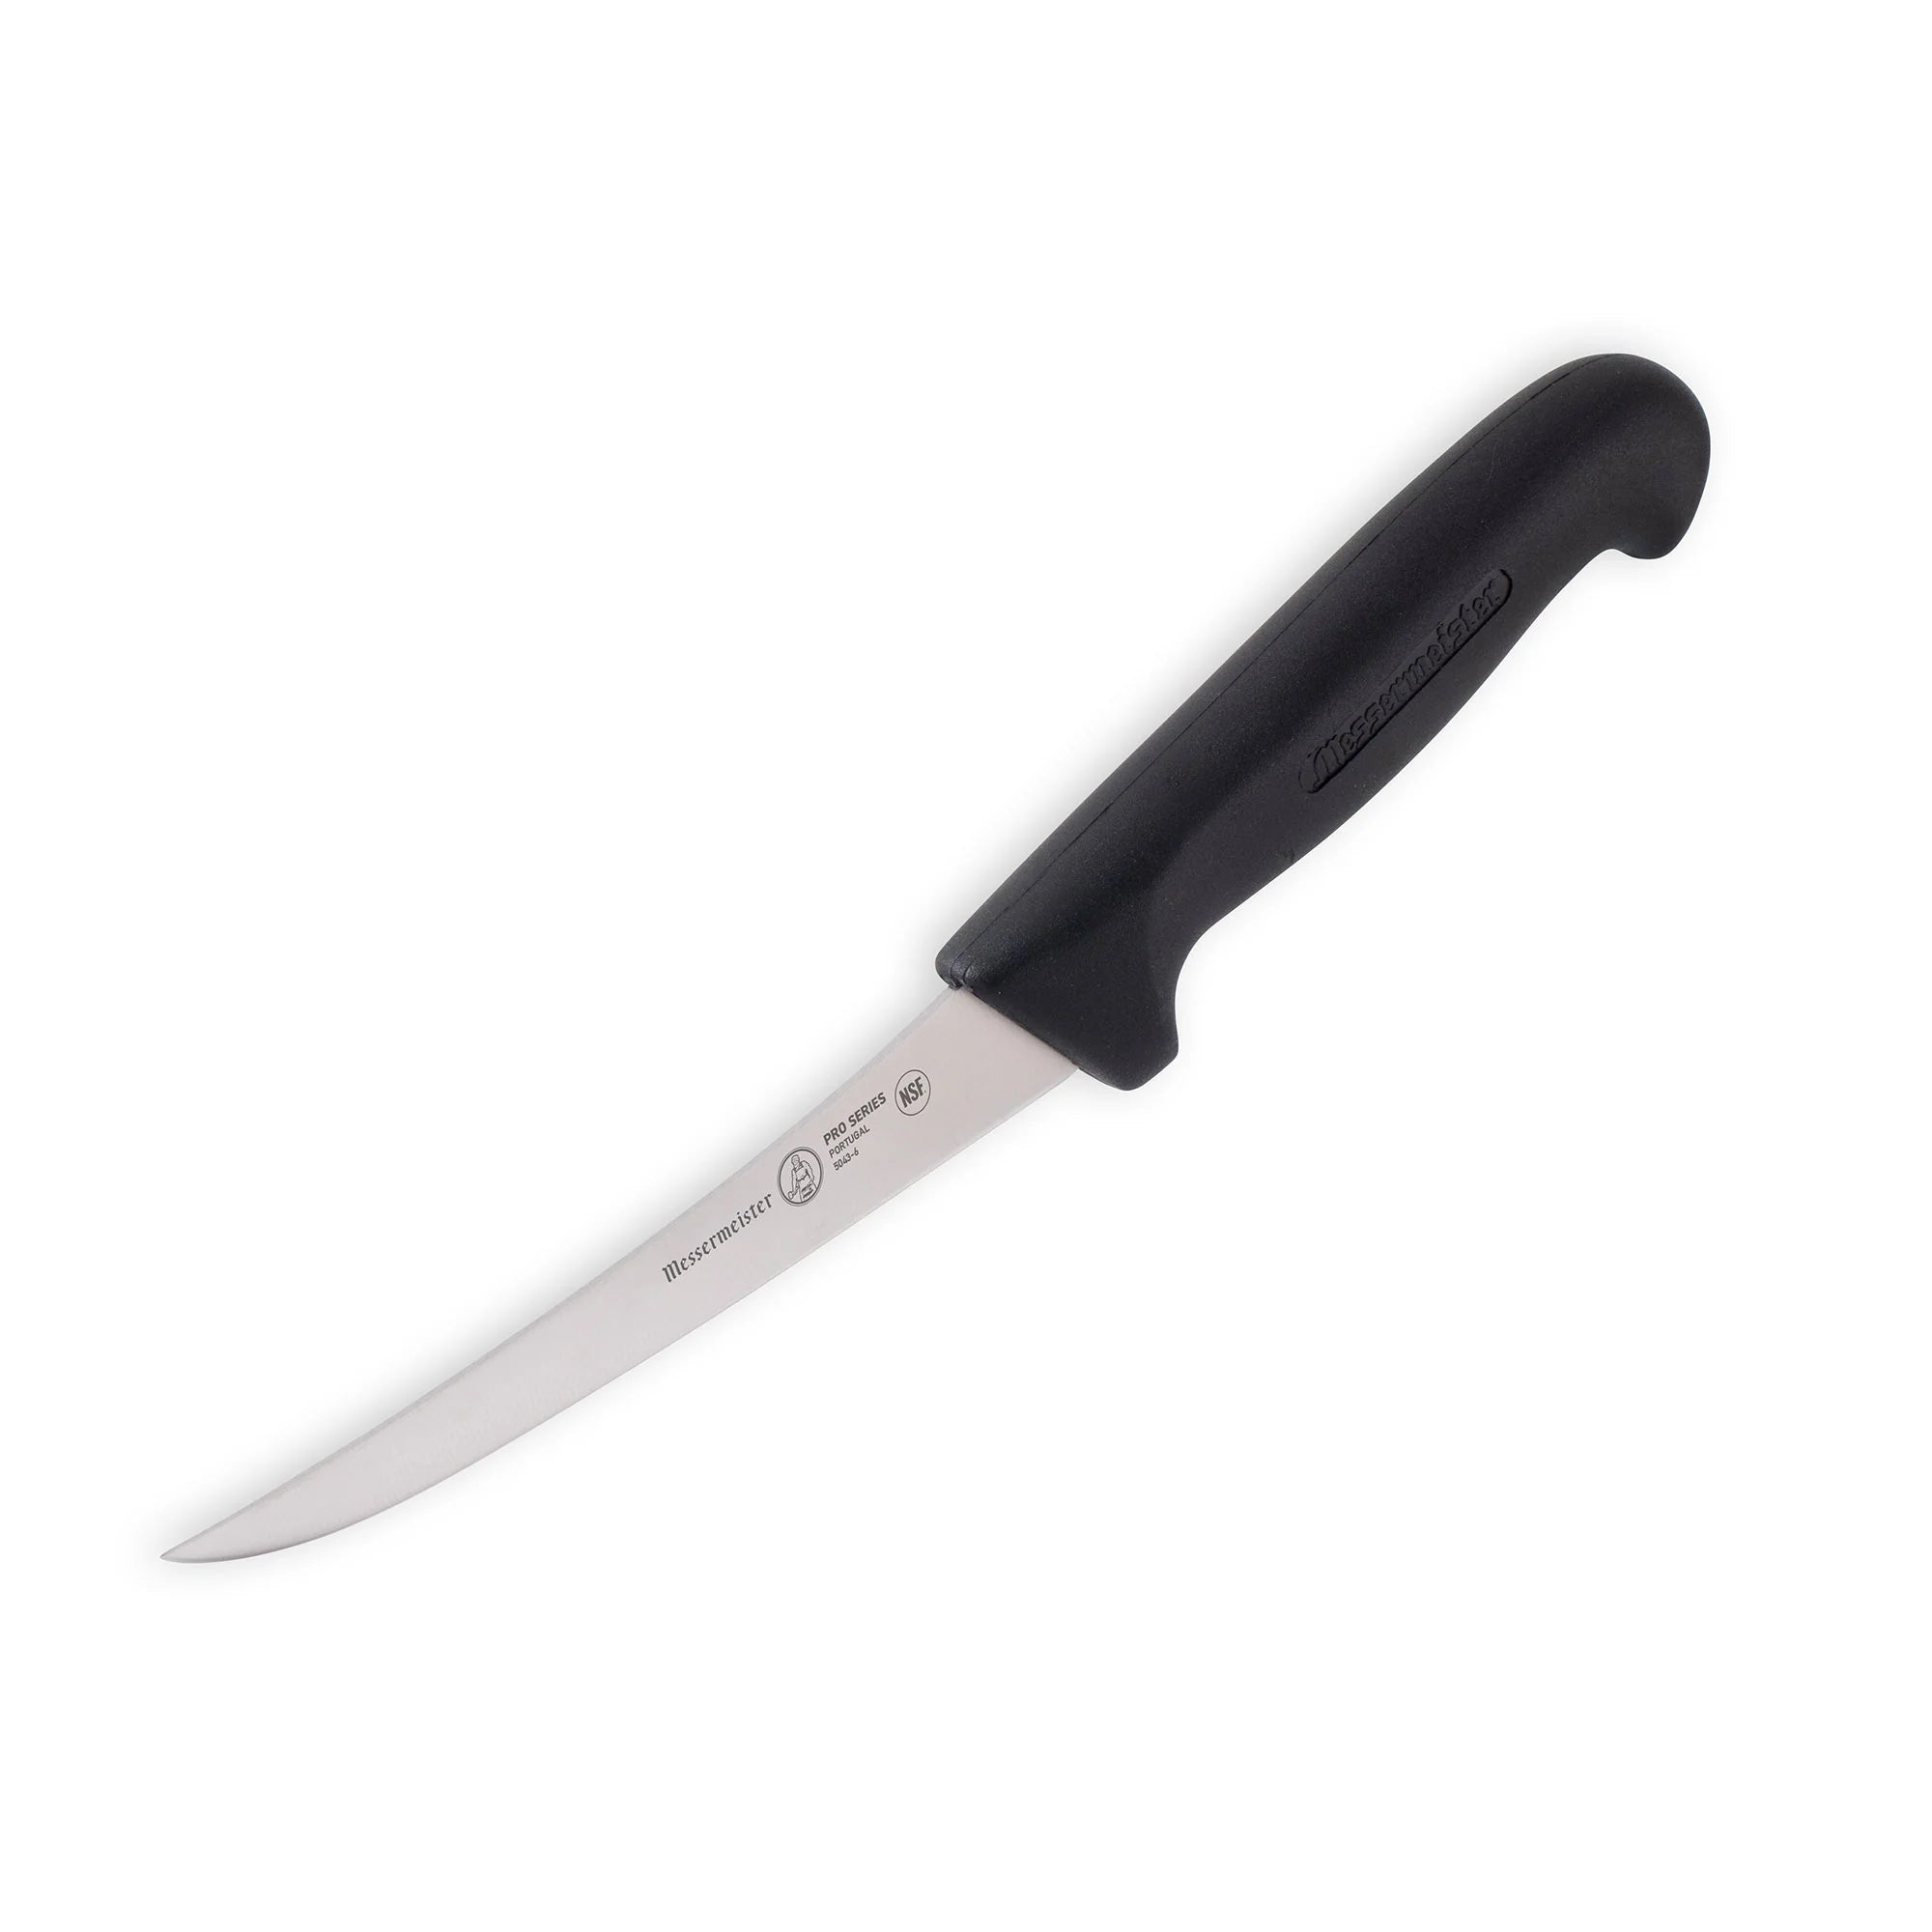 Messermeister Pro Series Curved Kullens Boning Knife - 6 Inch - Texas Star Grill Shop 5045-6K